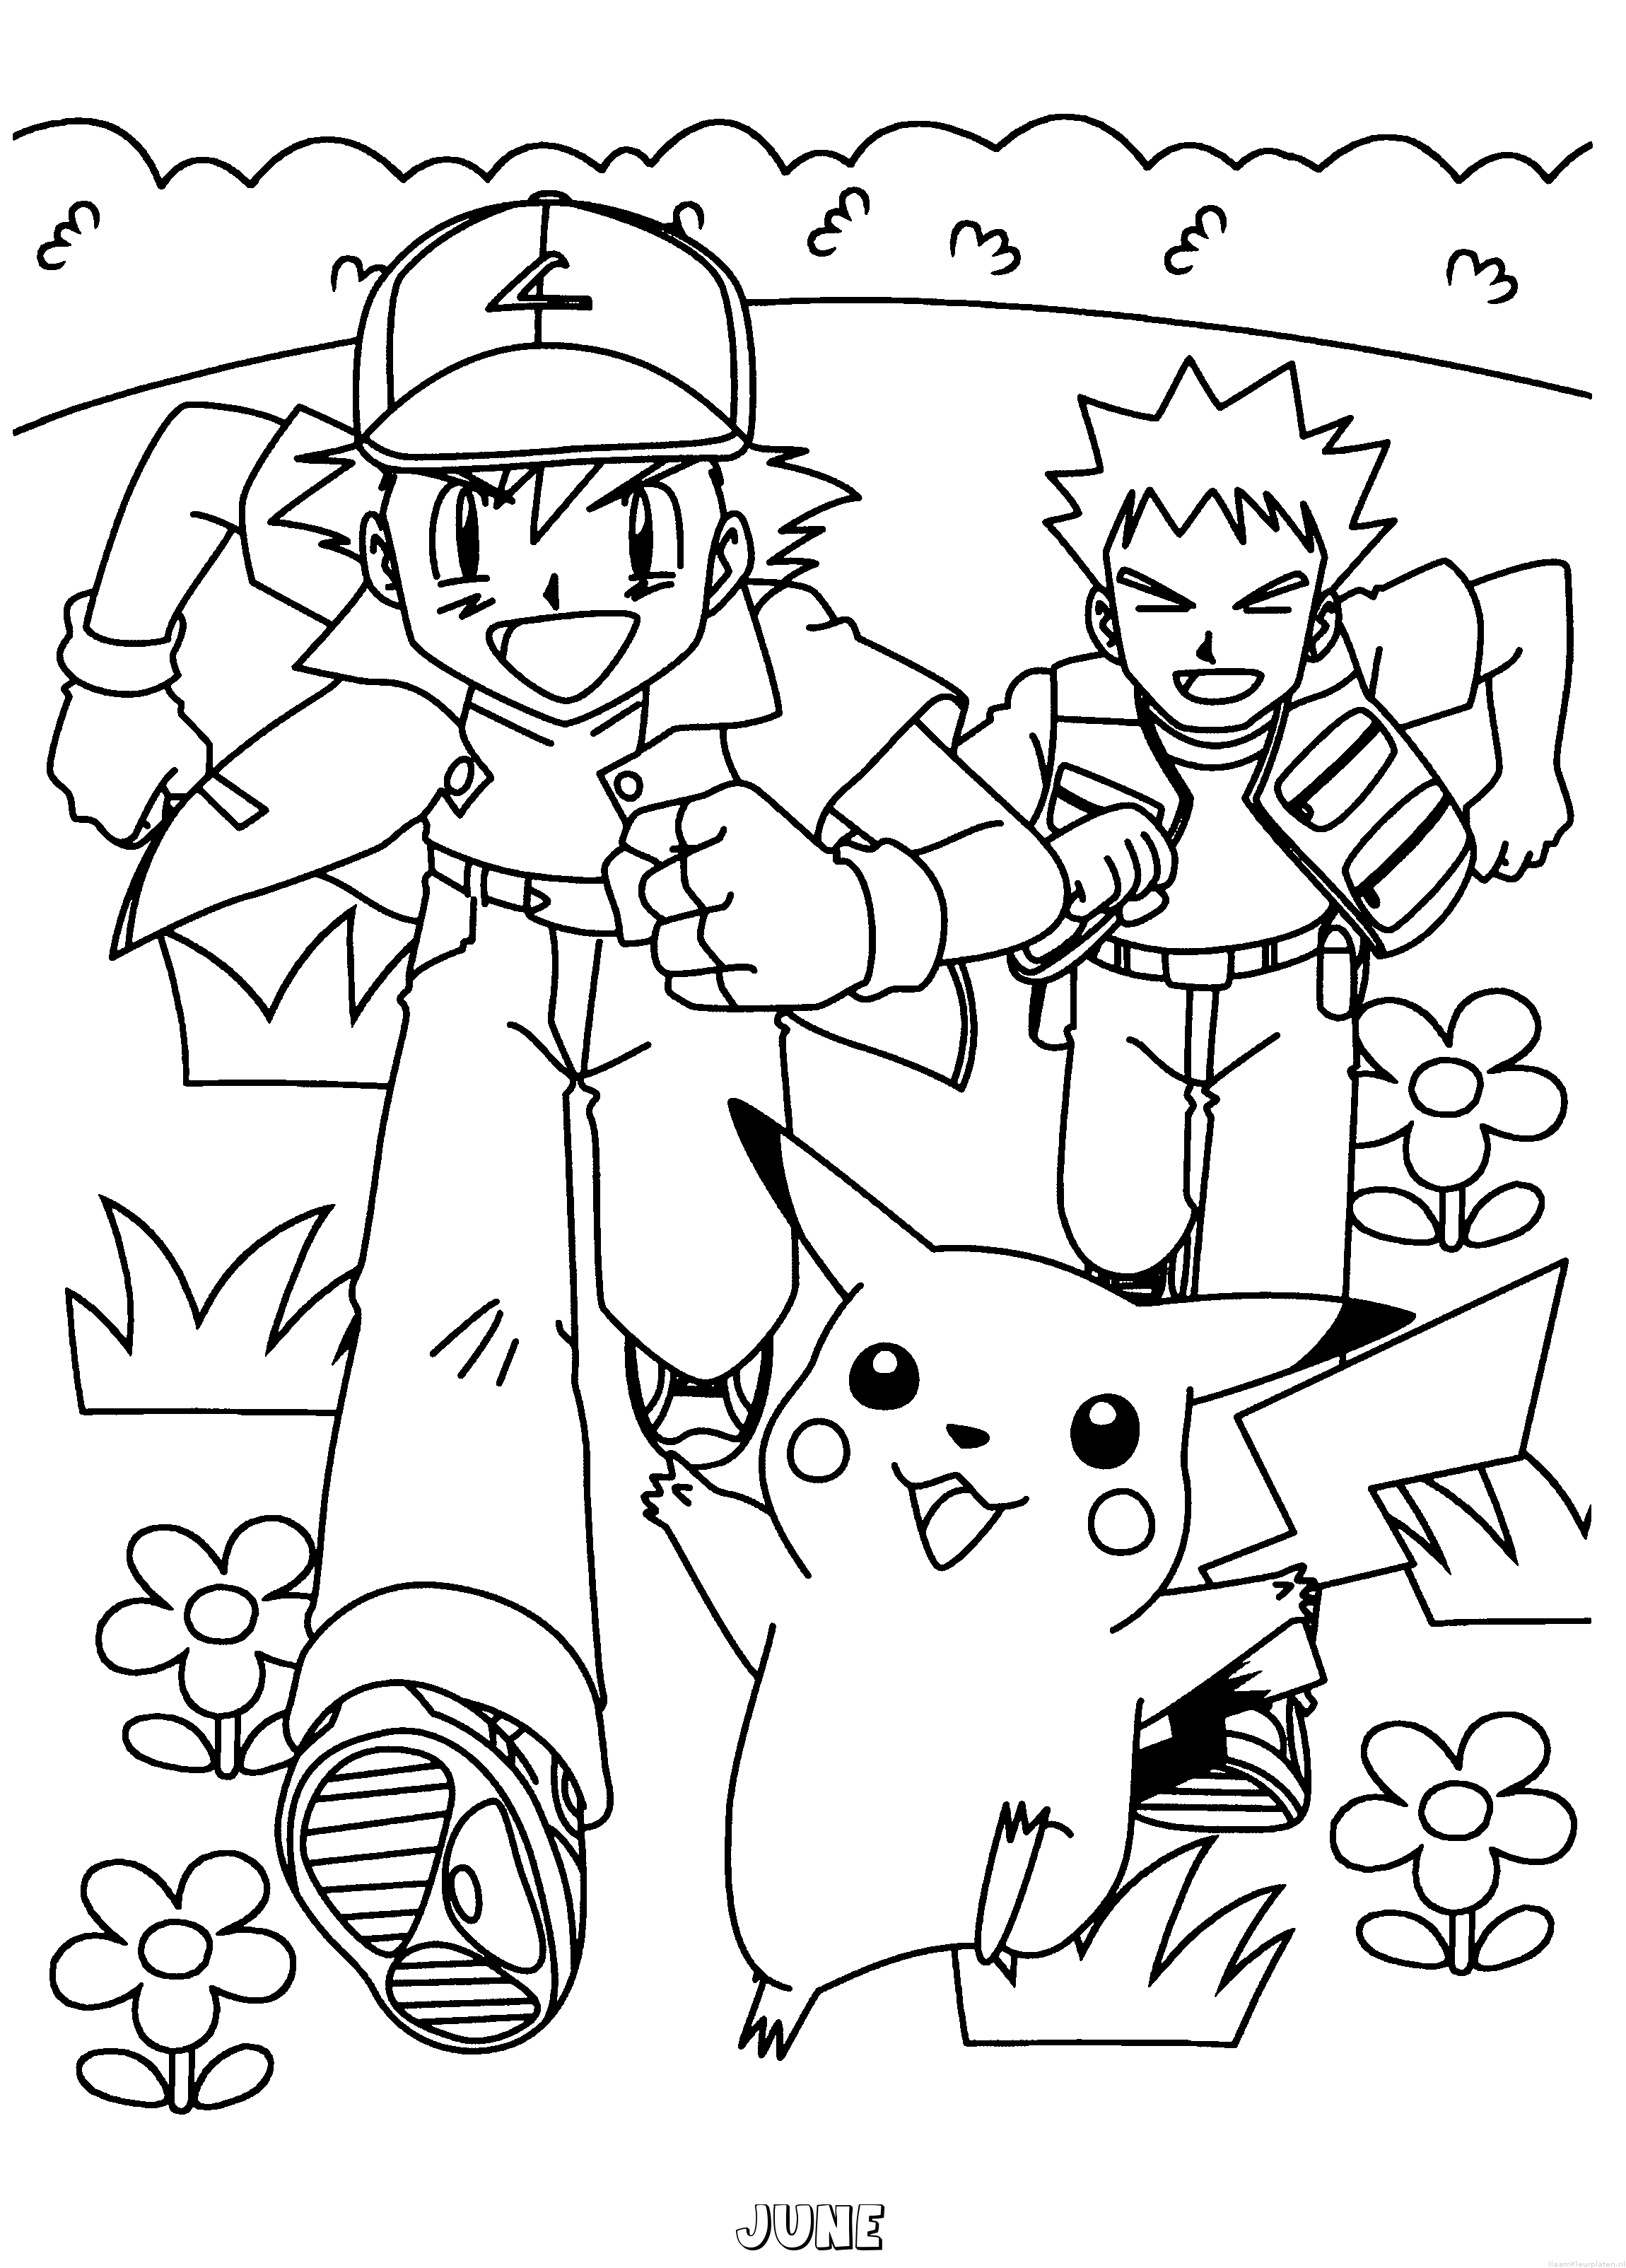 June pokemon